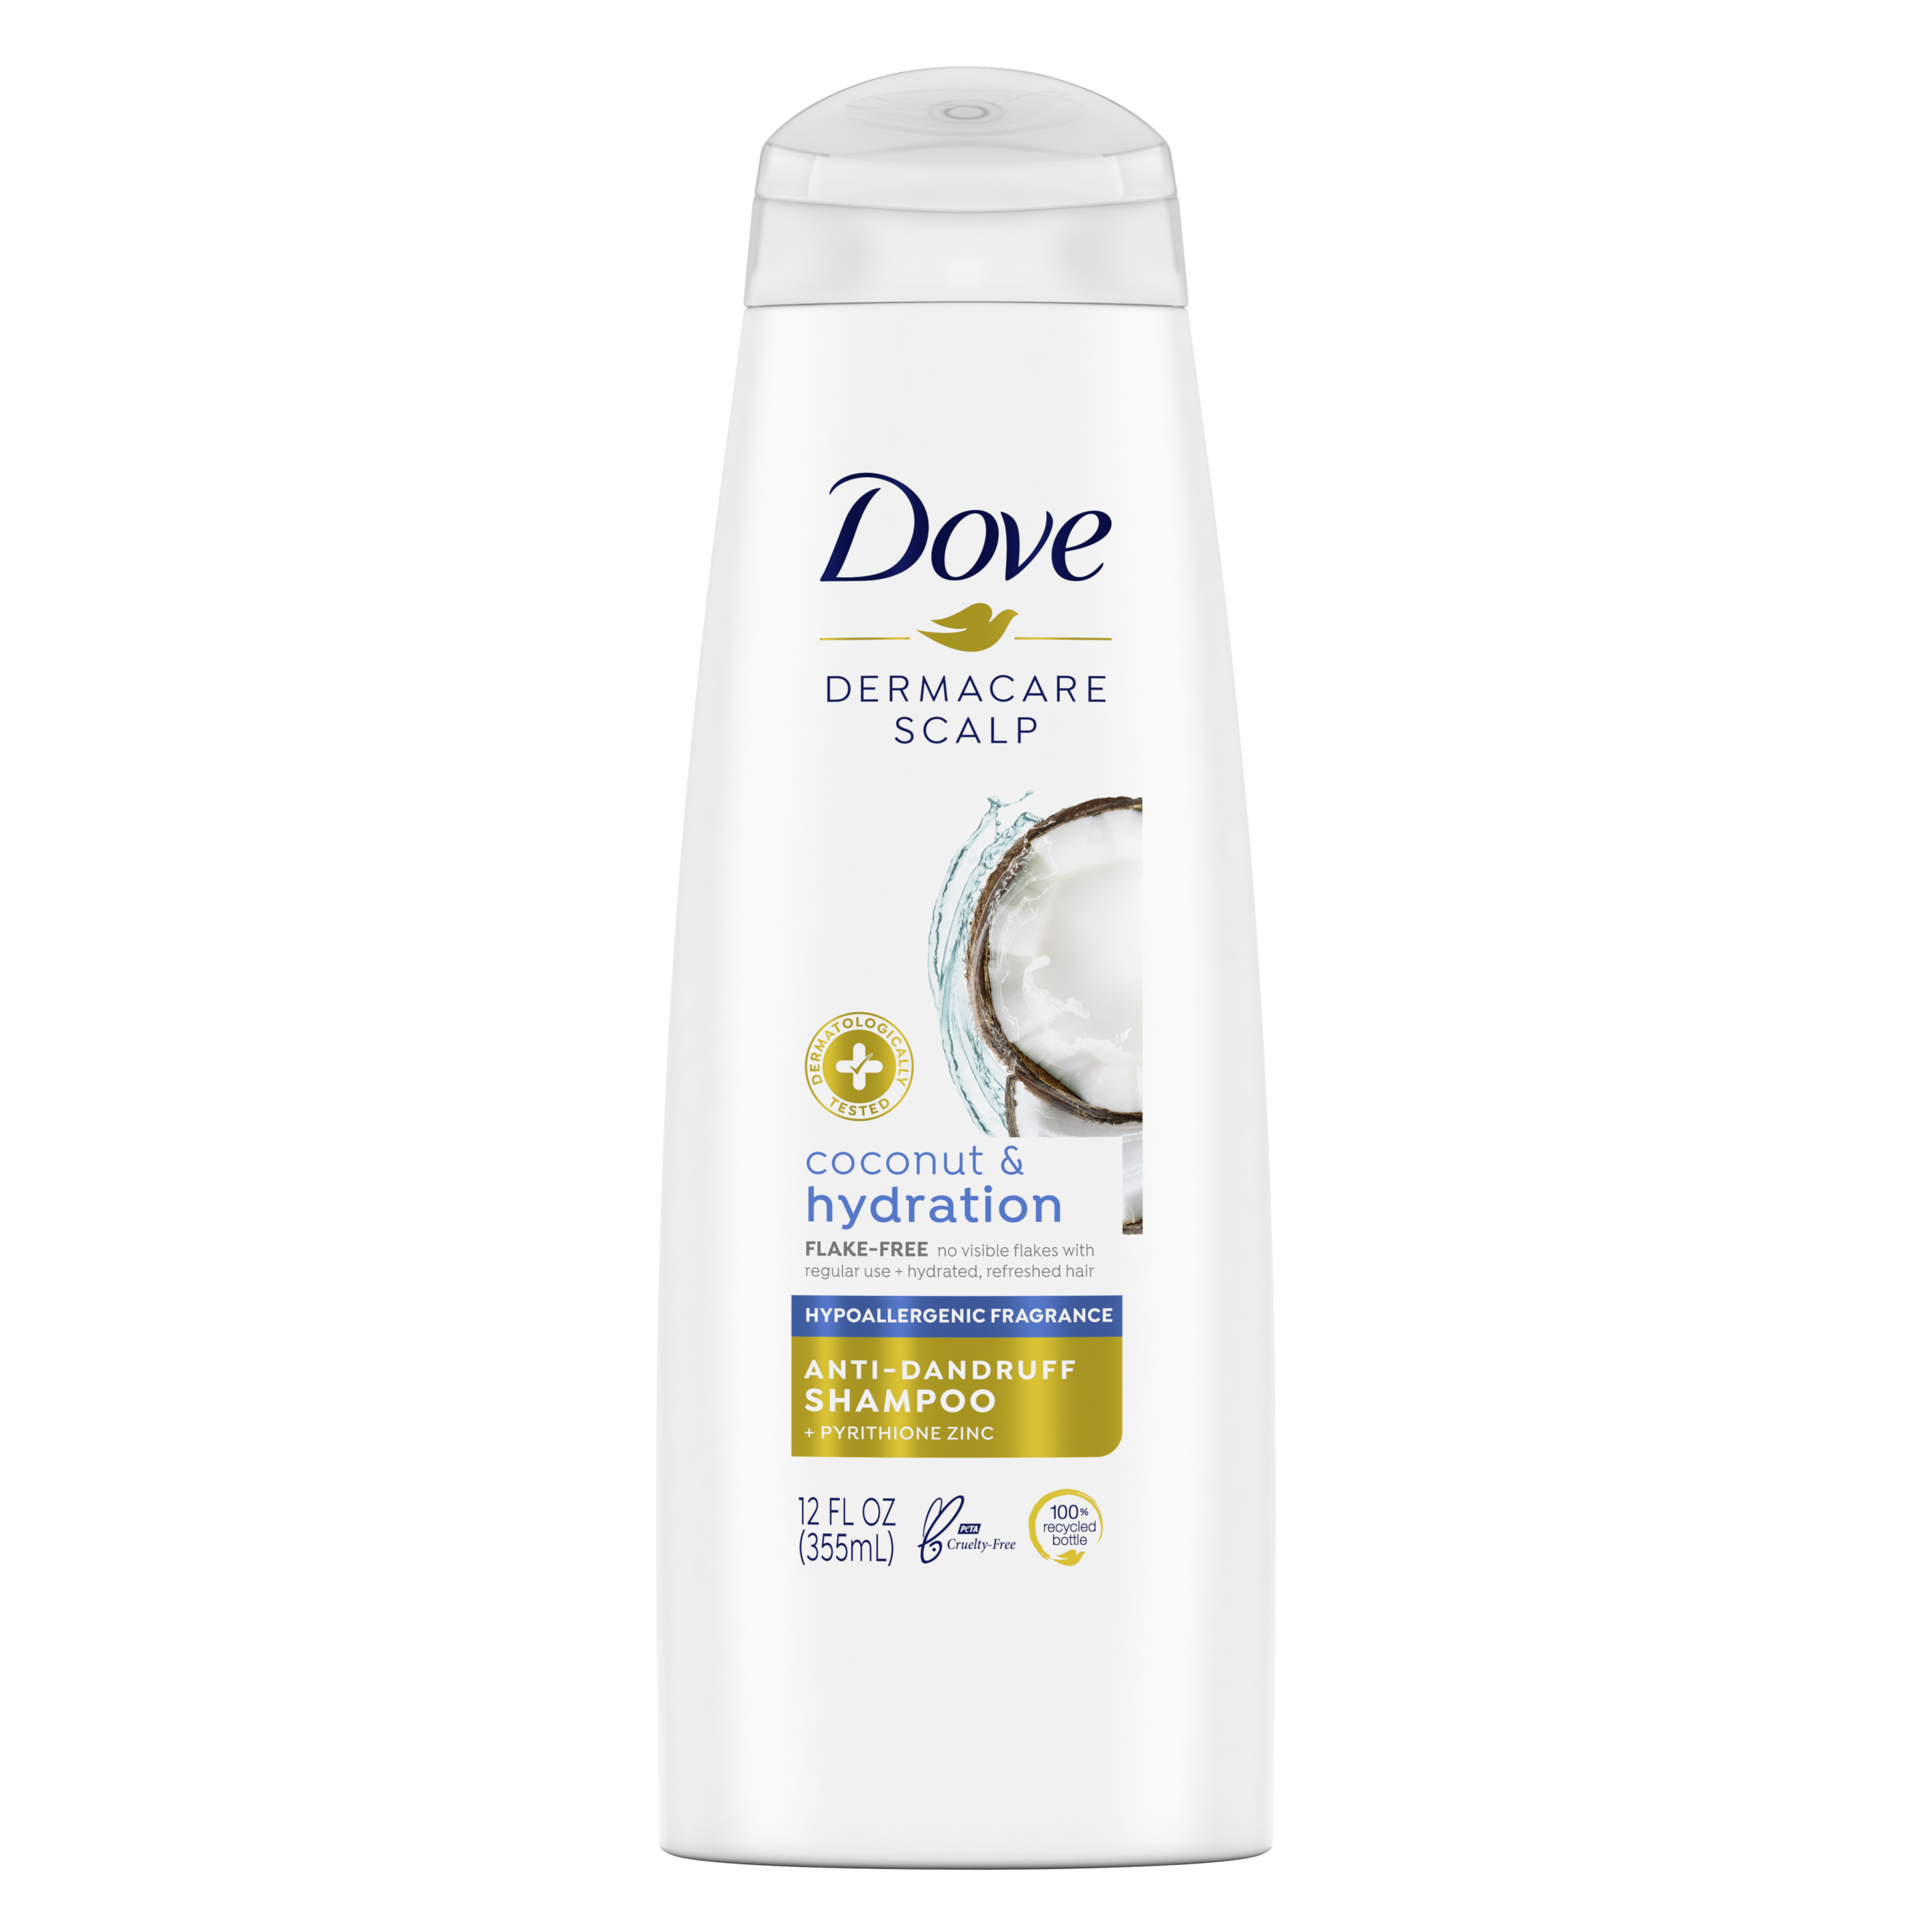 Dove DermaCare Scalp Coconut & Hydration Shampoo 12oz